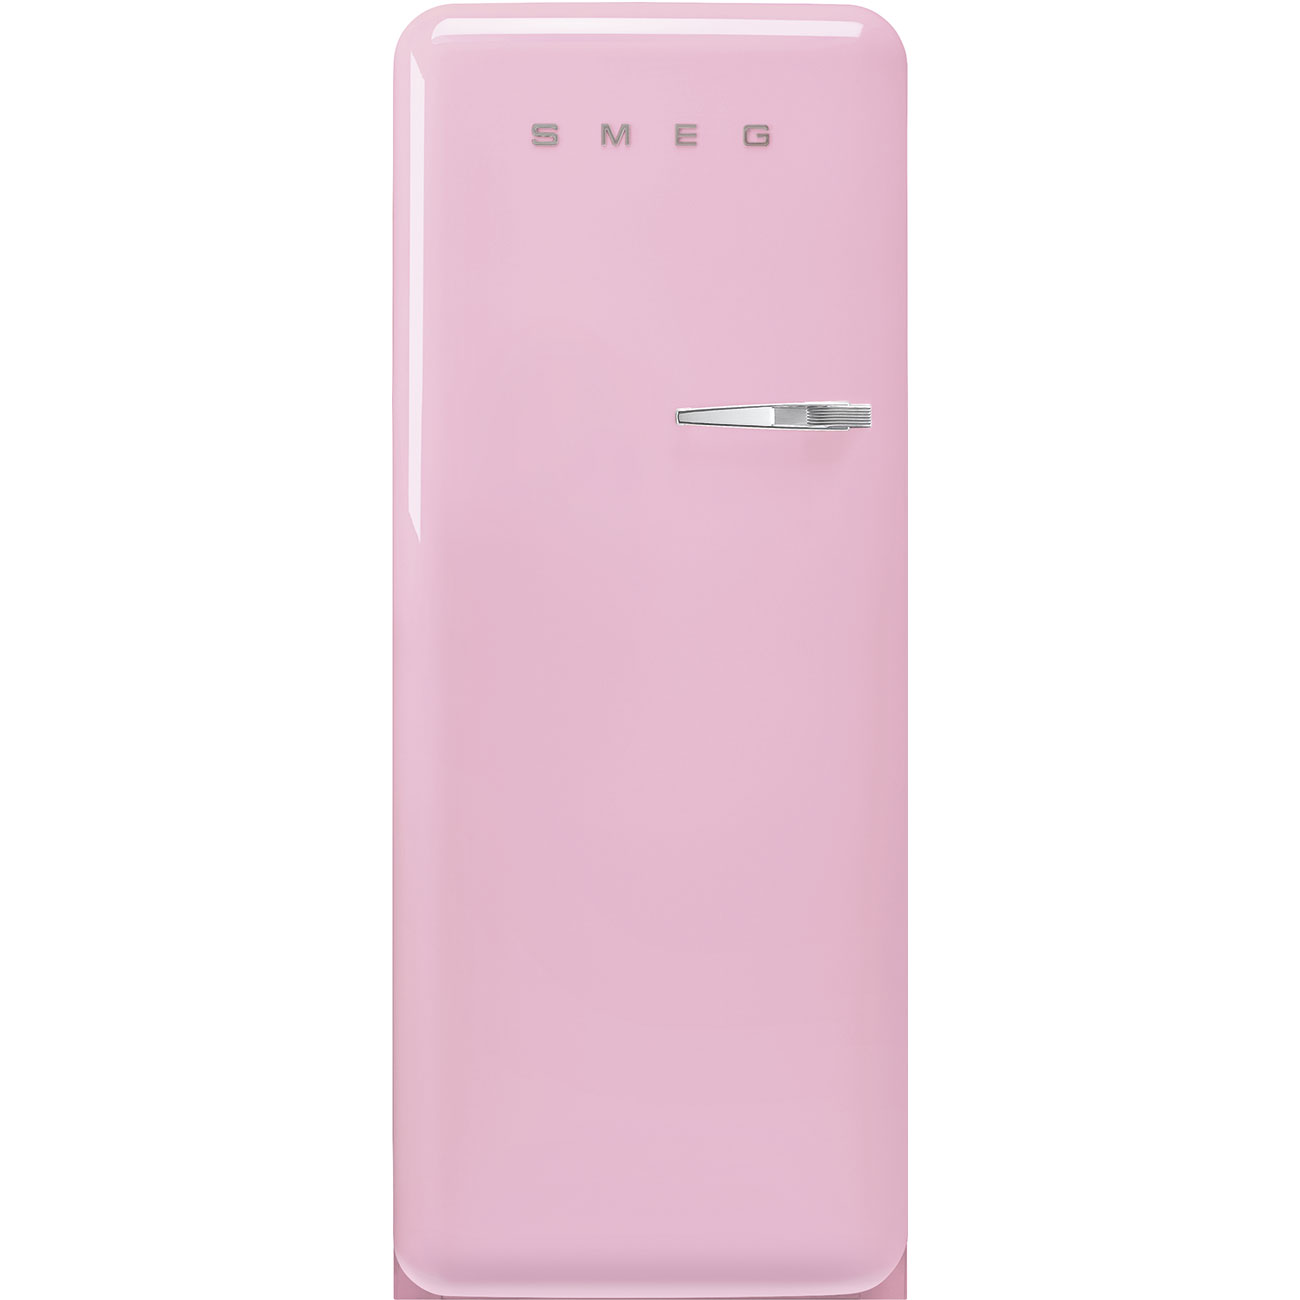 Roze koelkast - Smeg_1